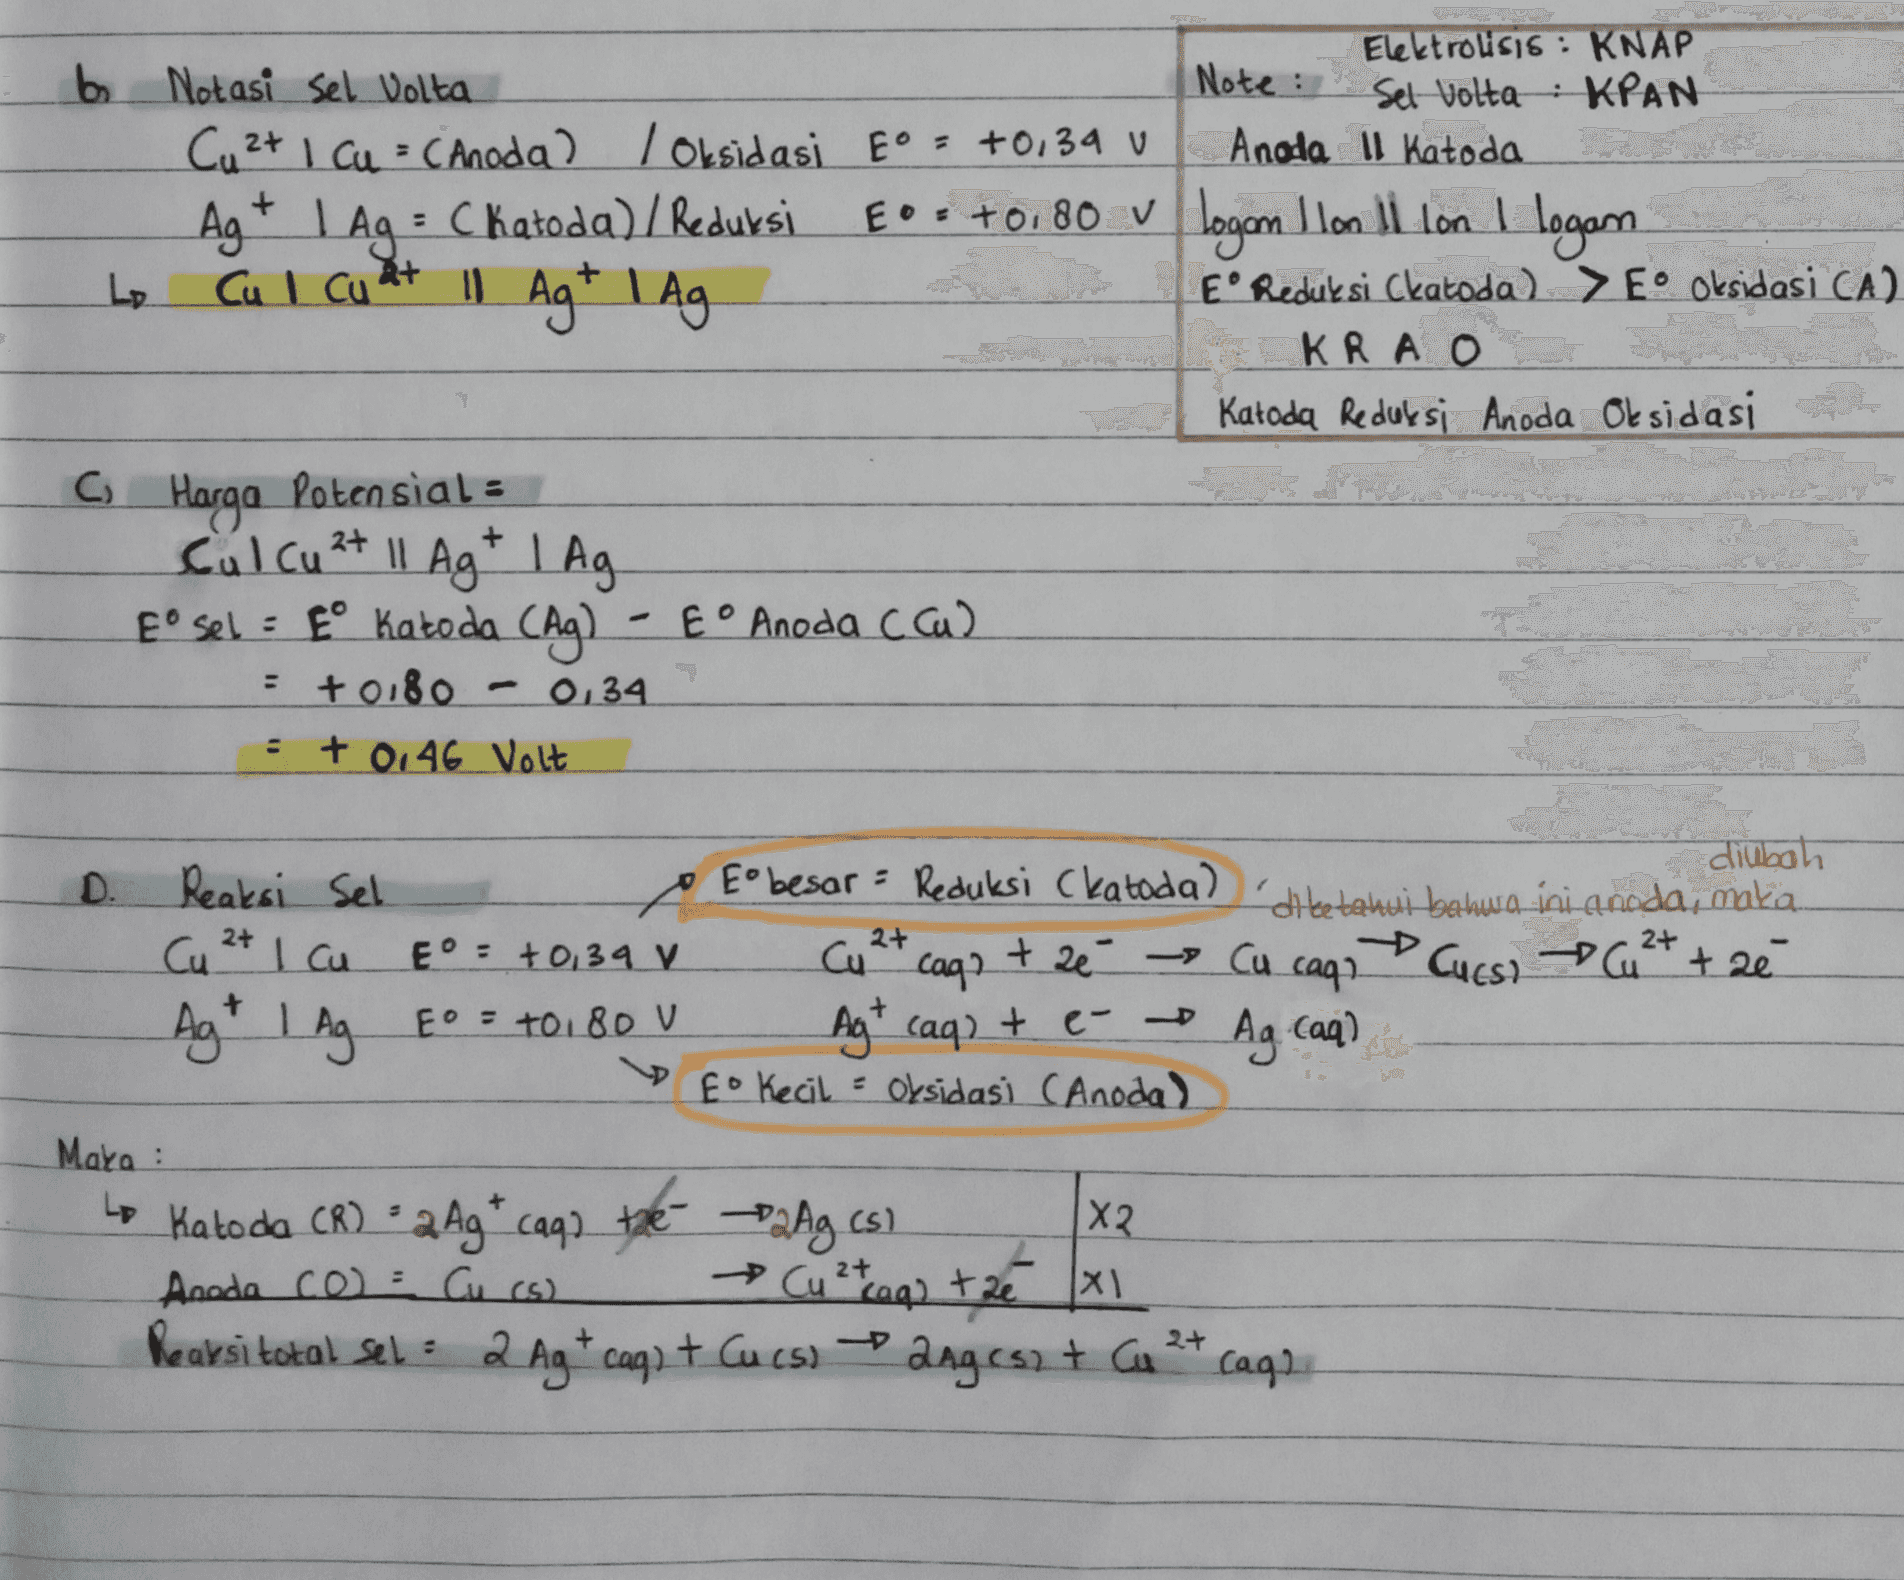 Elektrols16 : KNAP br Notasi sel Volta Note: Sel volta : KPAN Cu2+ Icu = C Anoda) / Oksidasi F° : +0,34 v Anoda 11 Katoda | Ag - C katoda)/Reduksi Eos +0.80 v Logan Jooli lon I logam Cul cu at 11 Agt lag E Reduksi Ckatoda) > EO oksidasi CA) KRAO Katoda Reduksi Anoda Oksidasi Ag + 1 Ag: C Harga Potensial : Calcu?+ 11 Agt 1 Ag Fosel: Katoda (Ag) - £ ° Anoda c.cum = + 0180 - 0,34 = + 0,46 Volt 2+ 2+ 2+ tae - Cu caq? Ag caq) diubah D. Reaksi Sel o Eo besar Reduksi (katoda). diketahui bahwa ini anoda, maka Cut I cu E° : +0,39 V Cul caq? Cucs, Cu2+ + ze Agt i Ag 50 : +0.80 V Agt caq) + e- Eo Kecil - Oksidasi (Anoda) Mata : to Katoda CR) = 2Ag cag) the 2Ag CSI X2 Anoda co Cu cs) → Cu ² trag) tré lxi Reaksi total set. 2 Ag+ cag) + Cucs) - ang.css + Cu 2+ Caga 